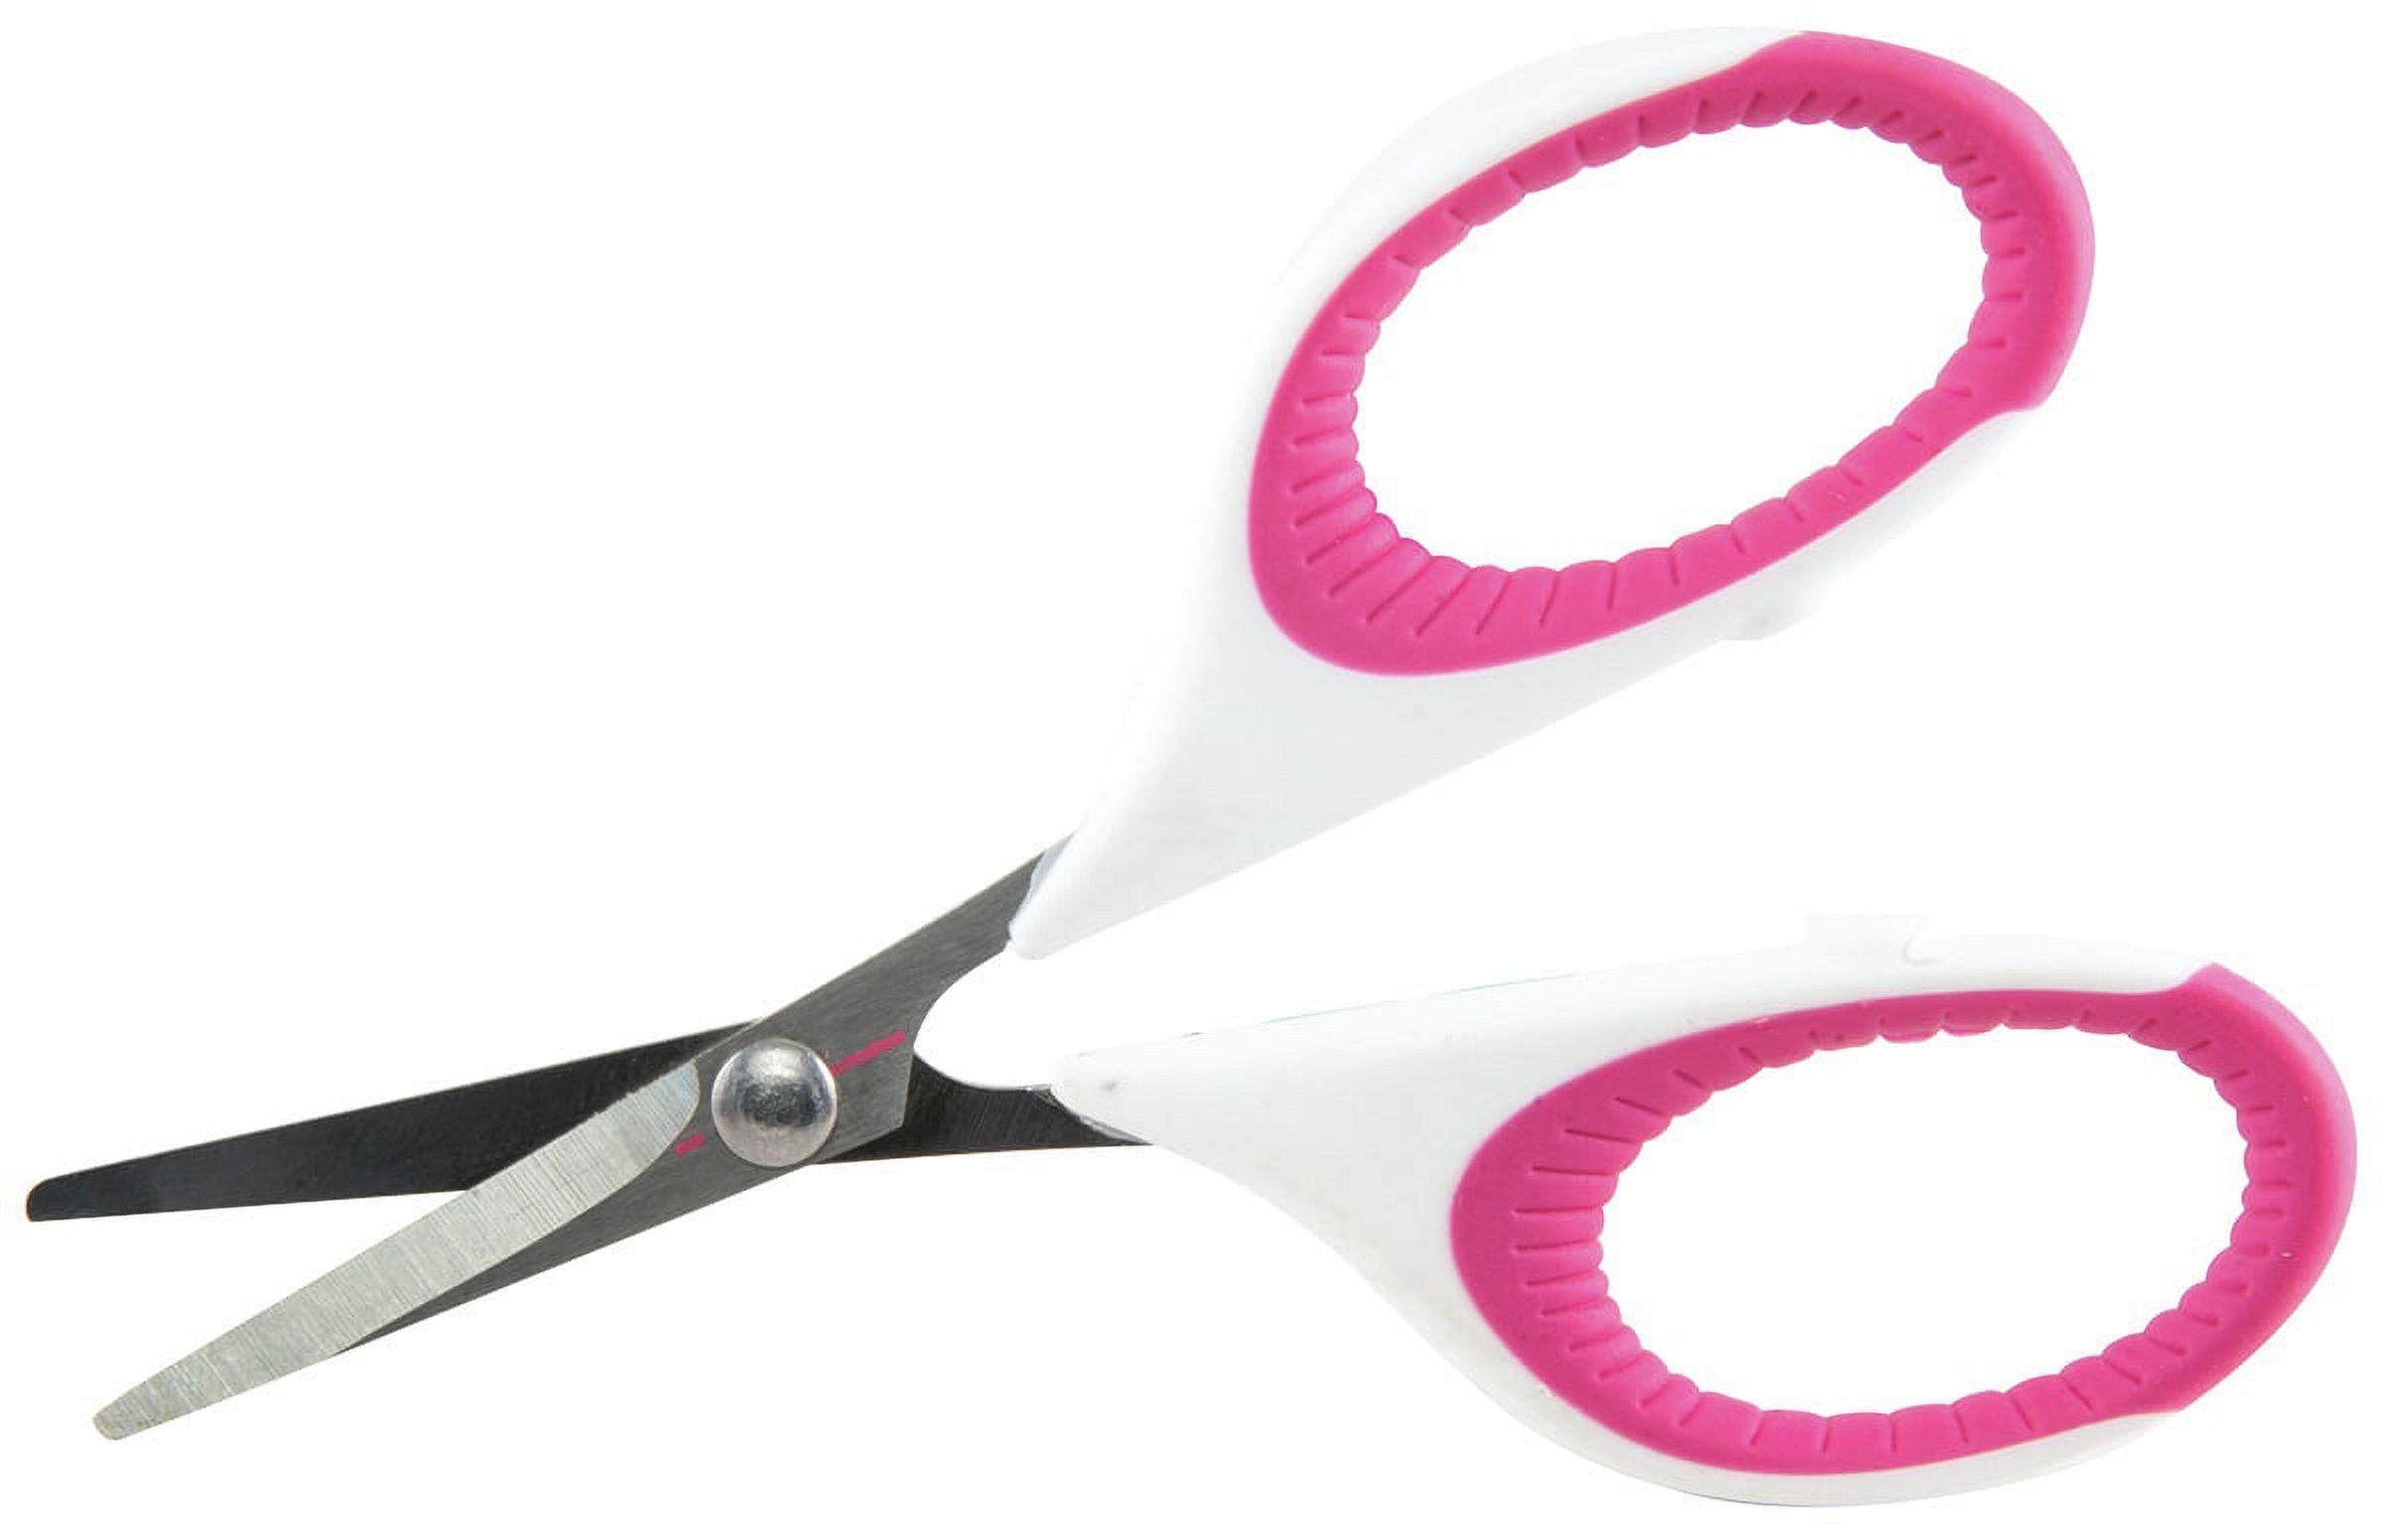 Singer Comfort Grip Craft Scissors 4"-Pink - image 3 of 4